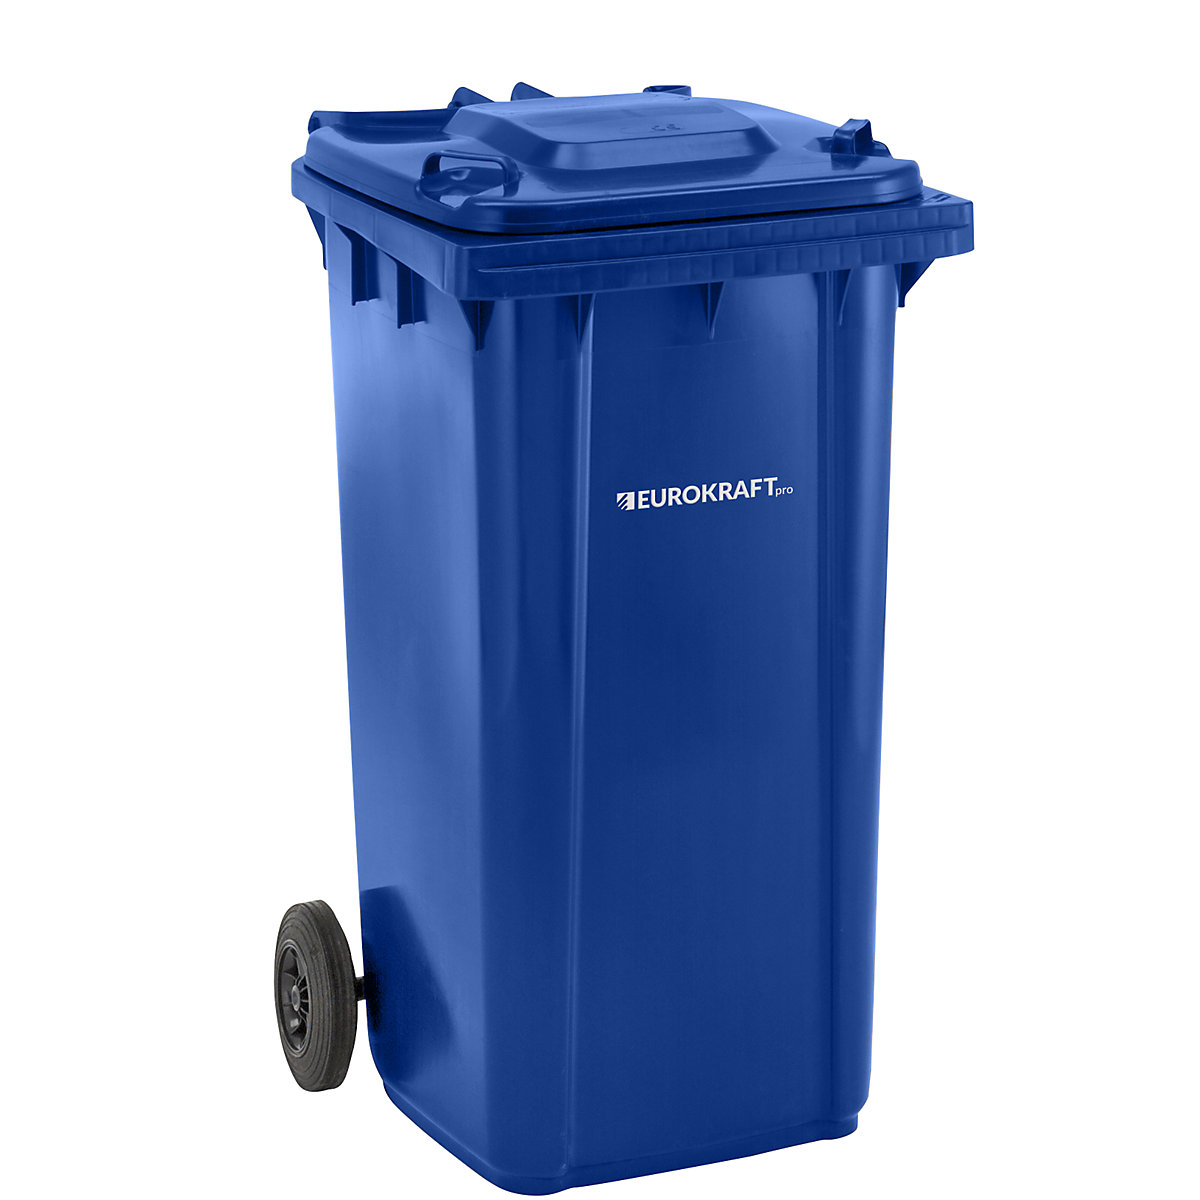 Contentor de lixo em plástico DIN EN 840 - eurokraft pro